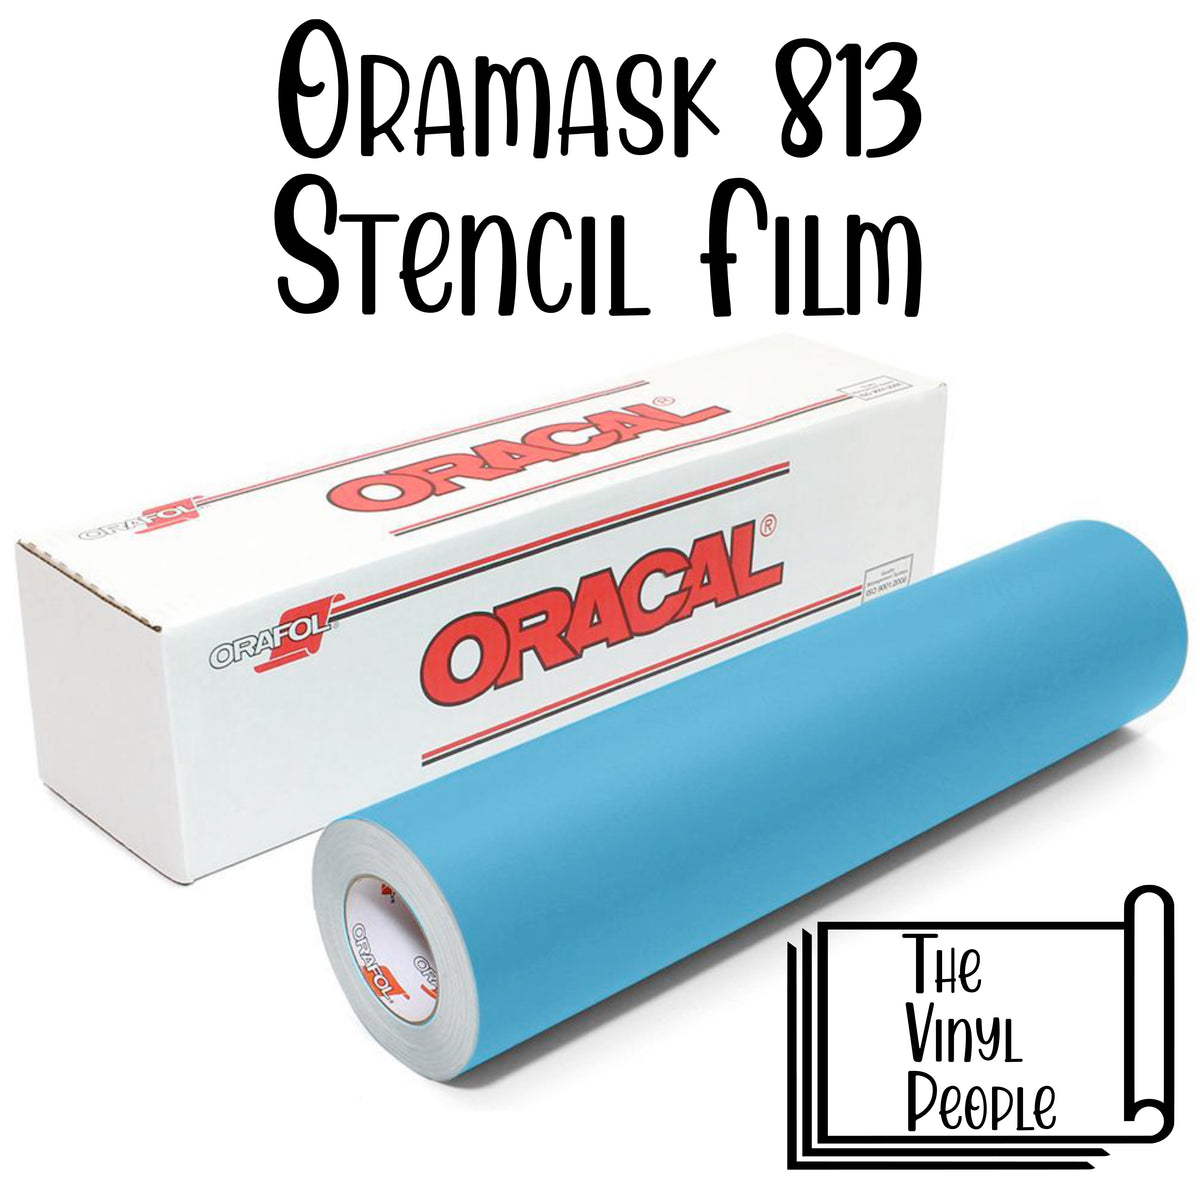 Oracal 813 Stencil Film